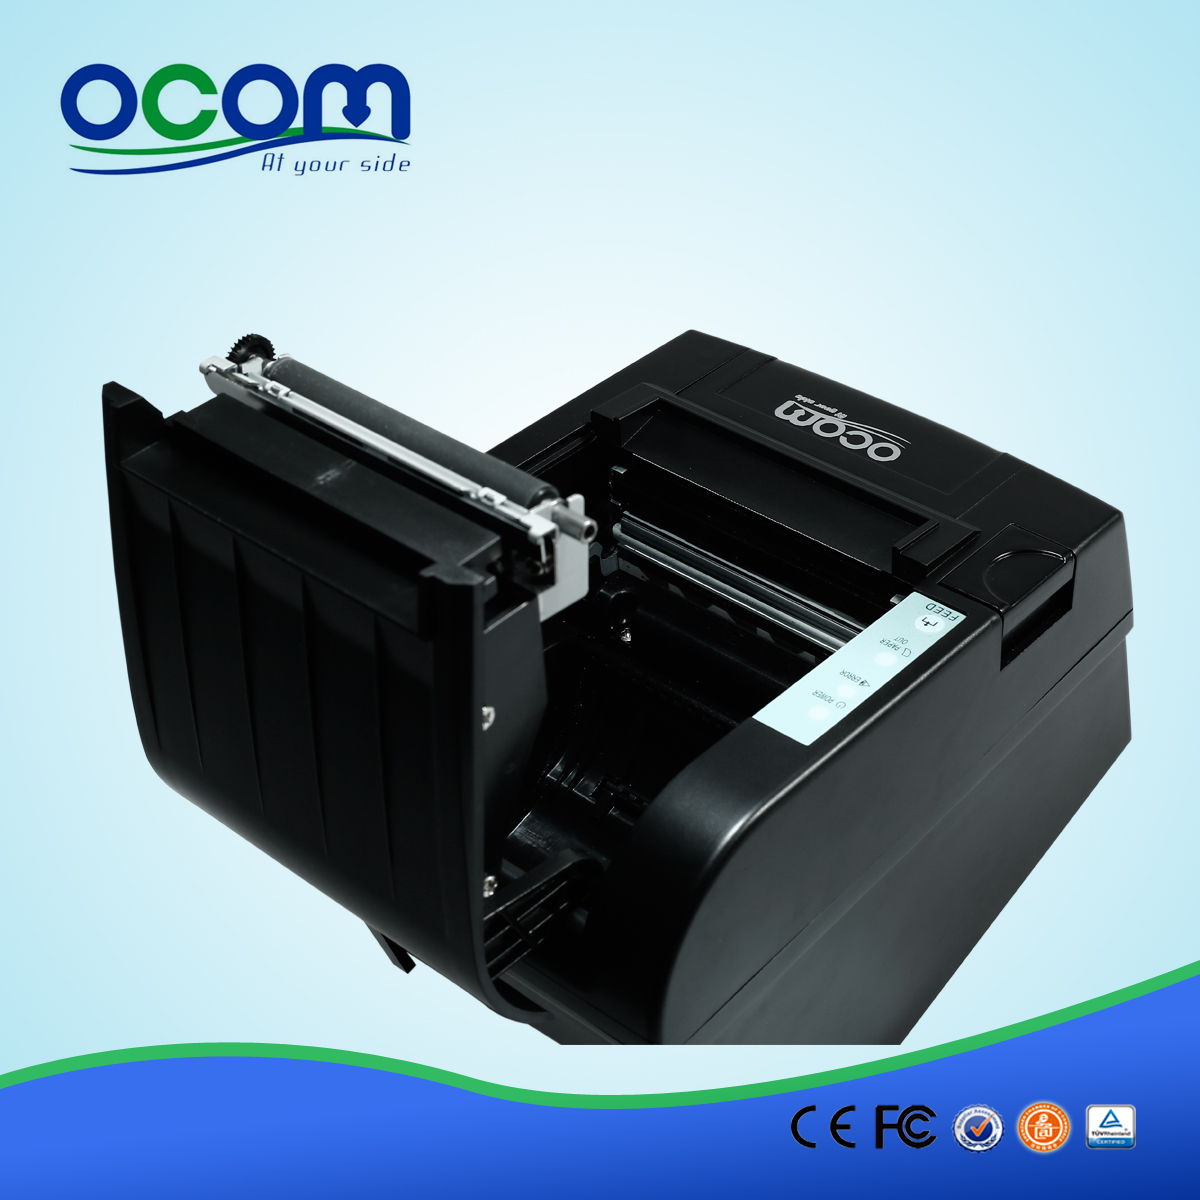 80mm Wifi Impresora Térmica de Recibo OCPP-806-W